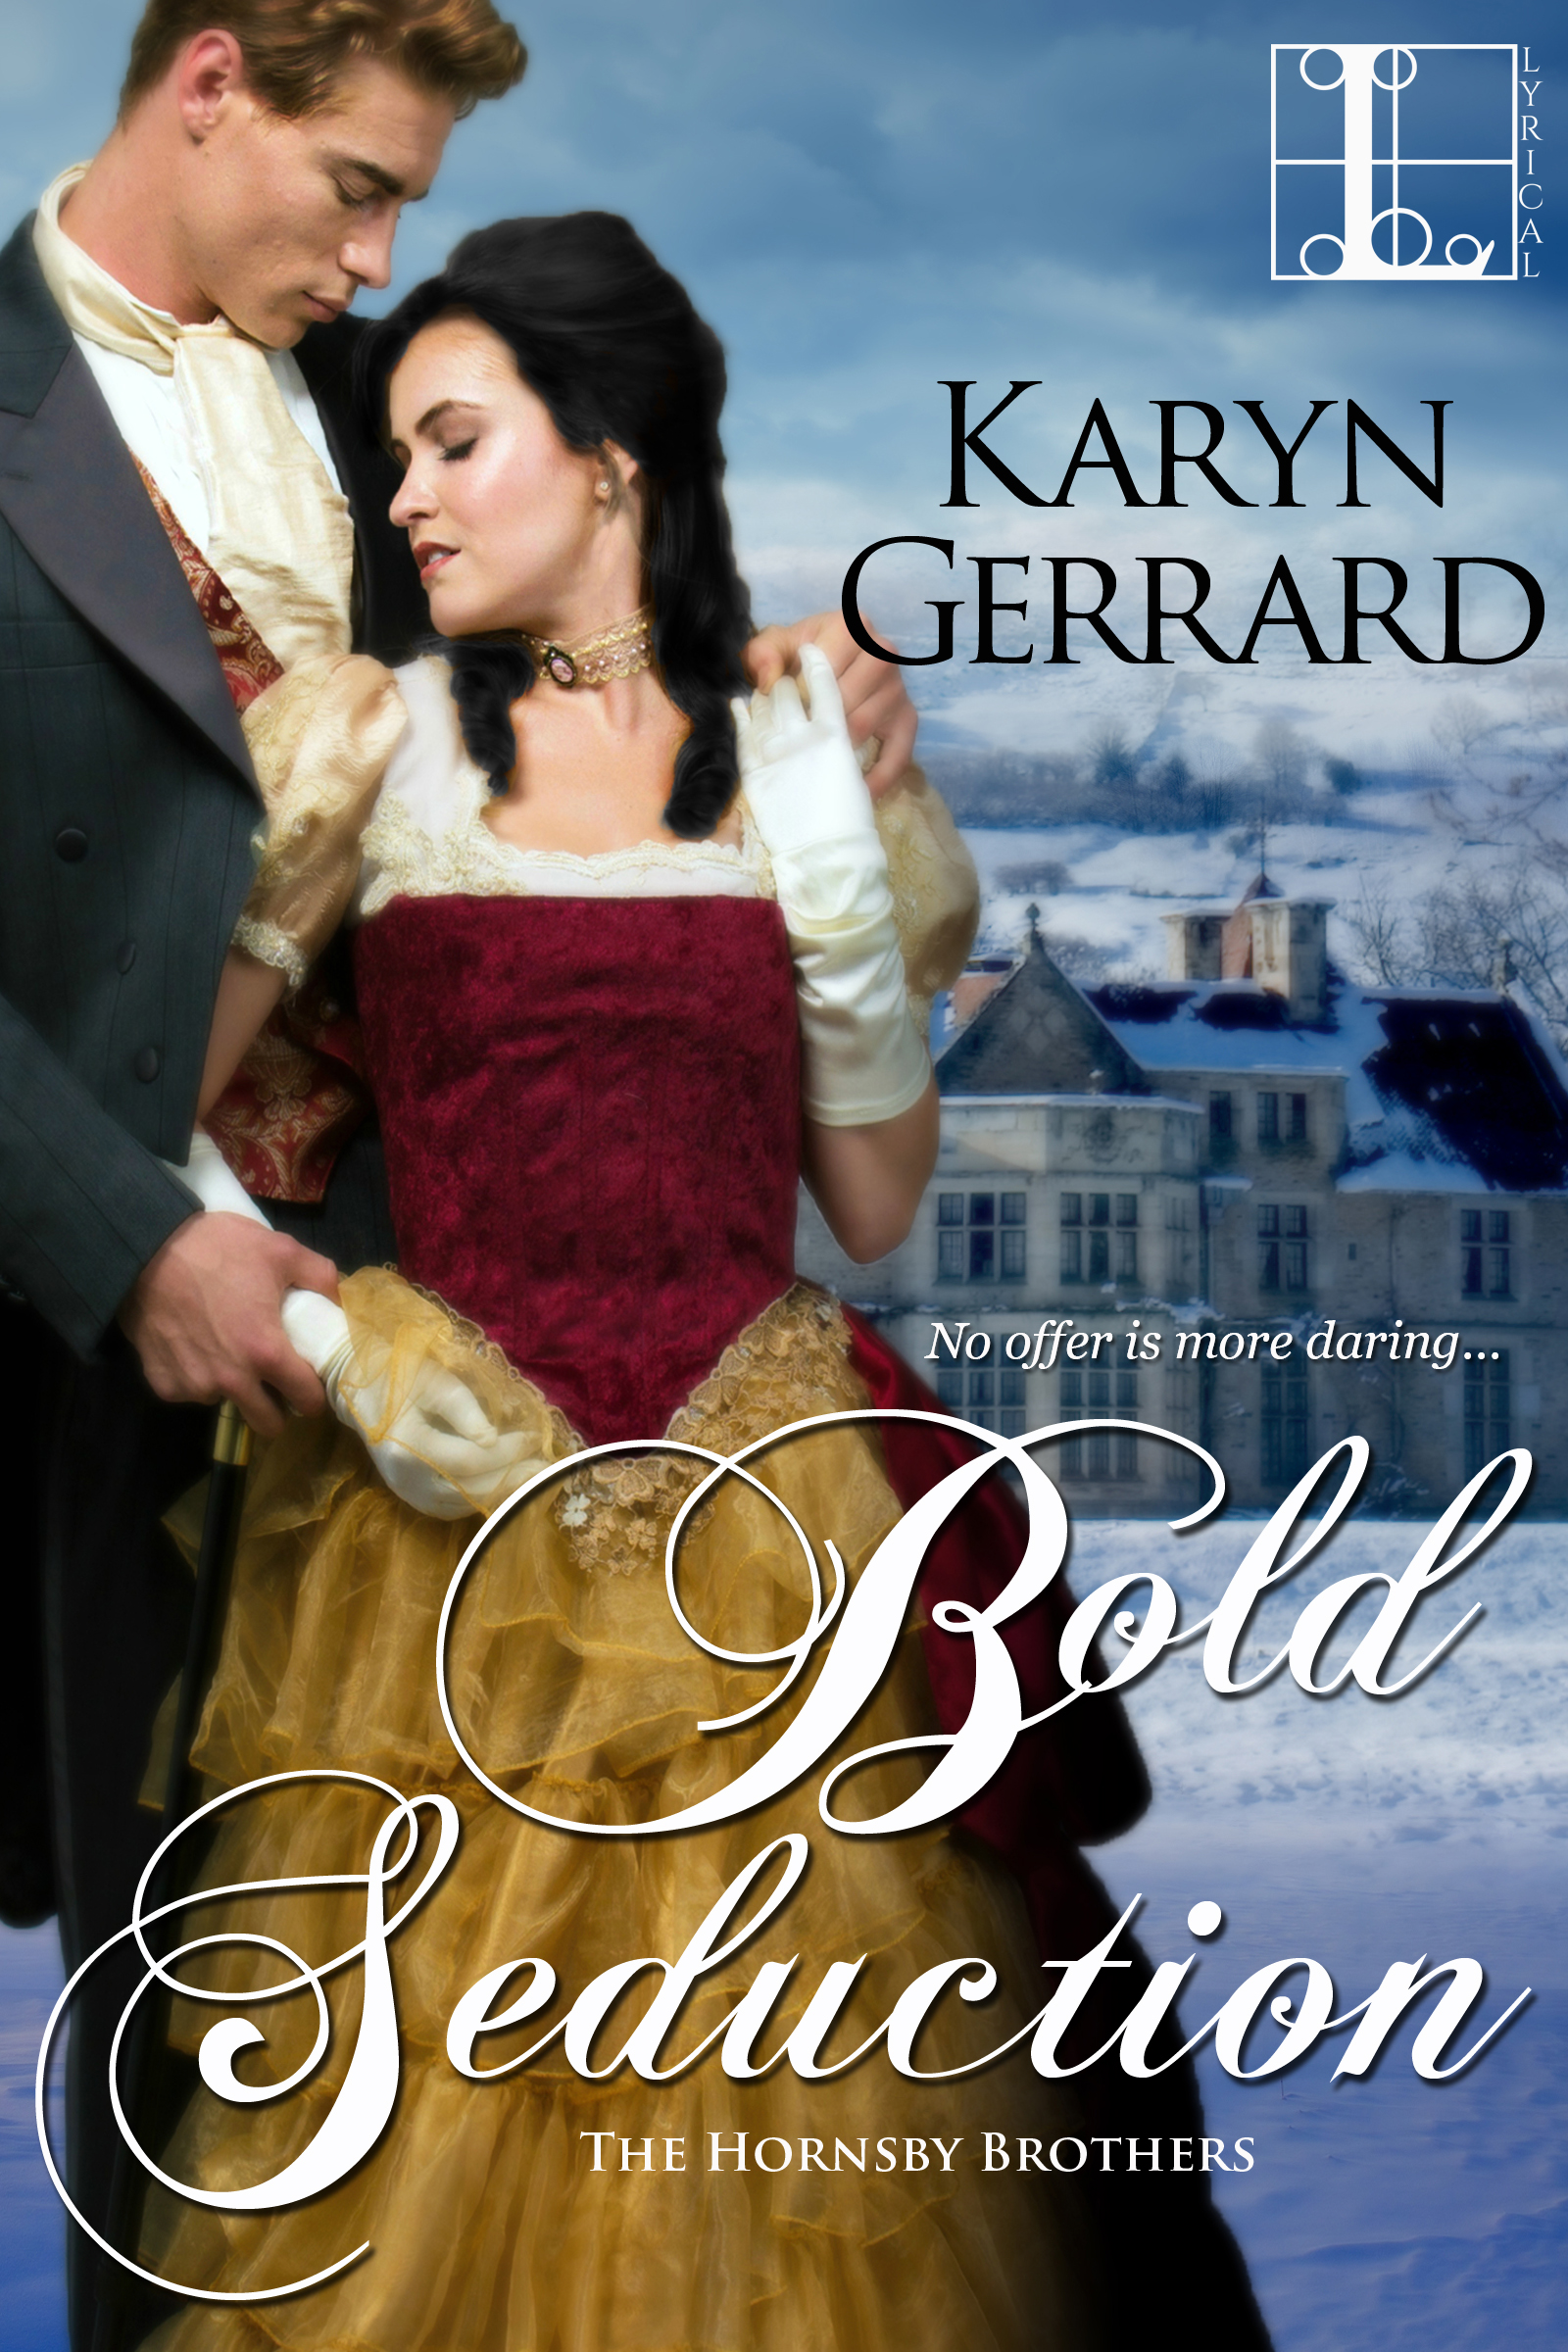 Book Review: Bold Seduction by Karyn Gerrard